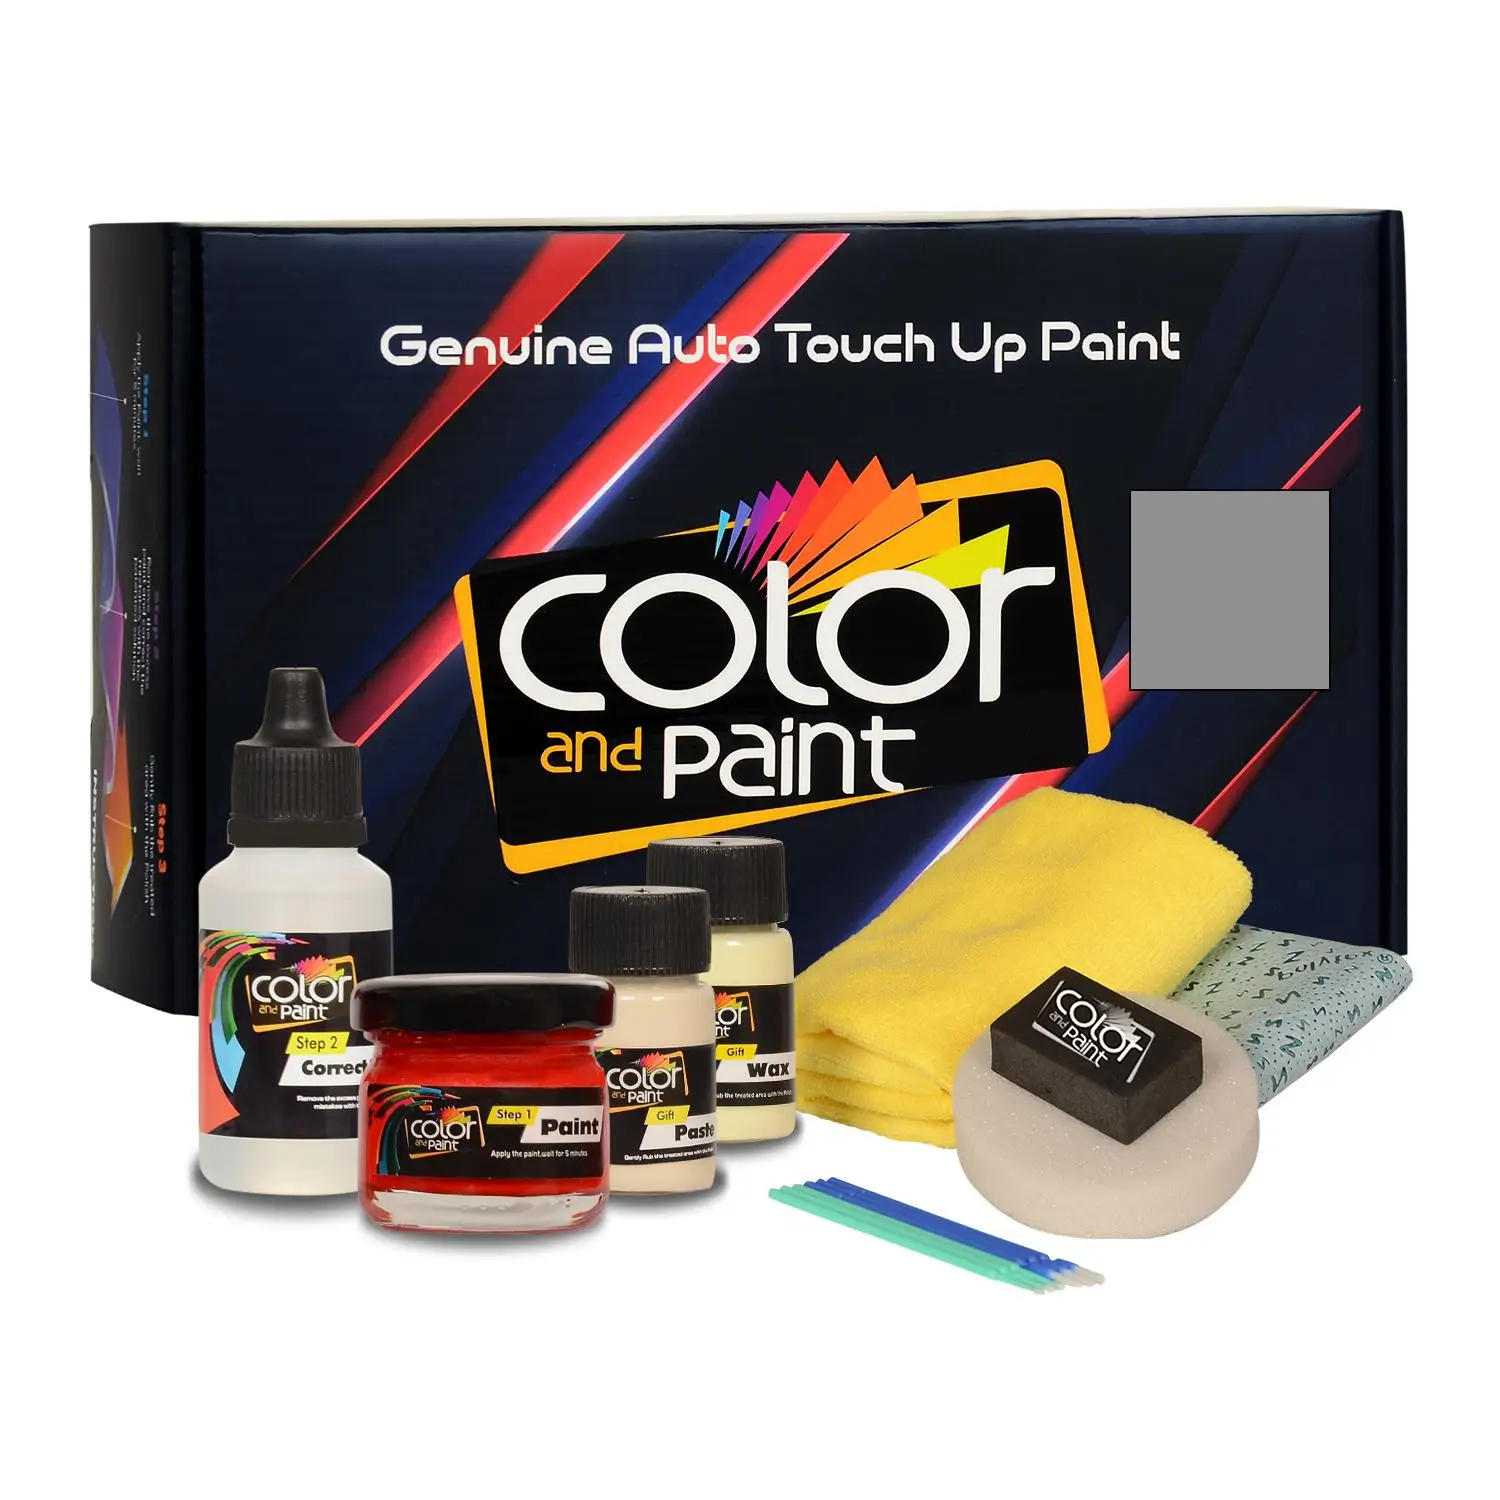 

Color and Paint compatible with Peugeot Automotive Touch Up Paint - GRIS - 1026 - Basic Care